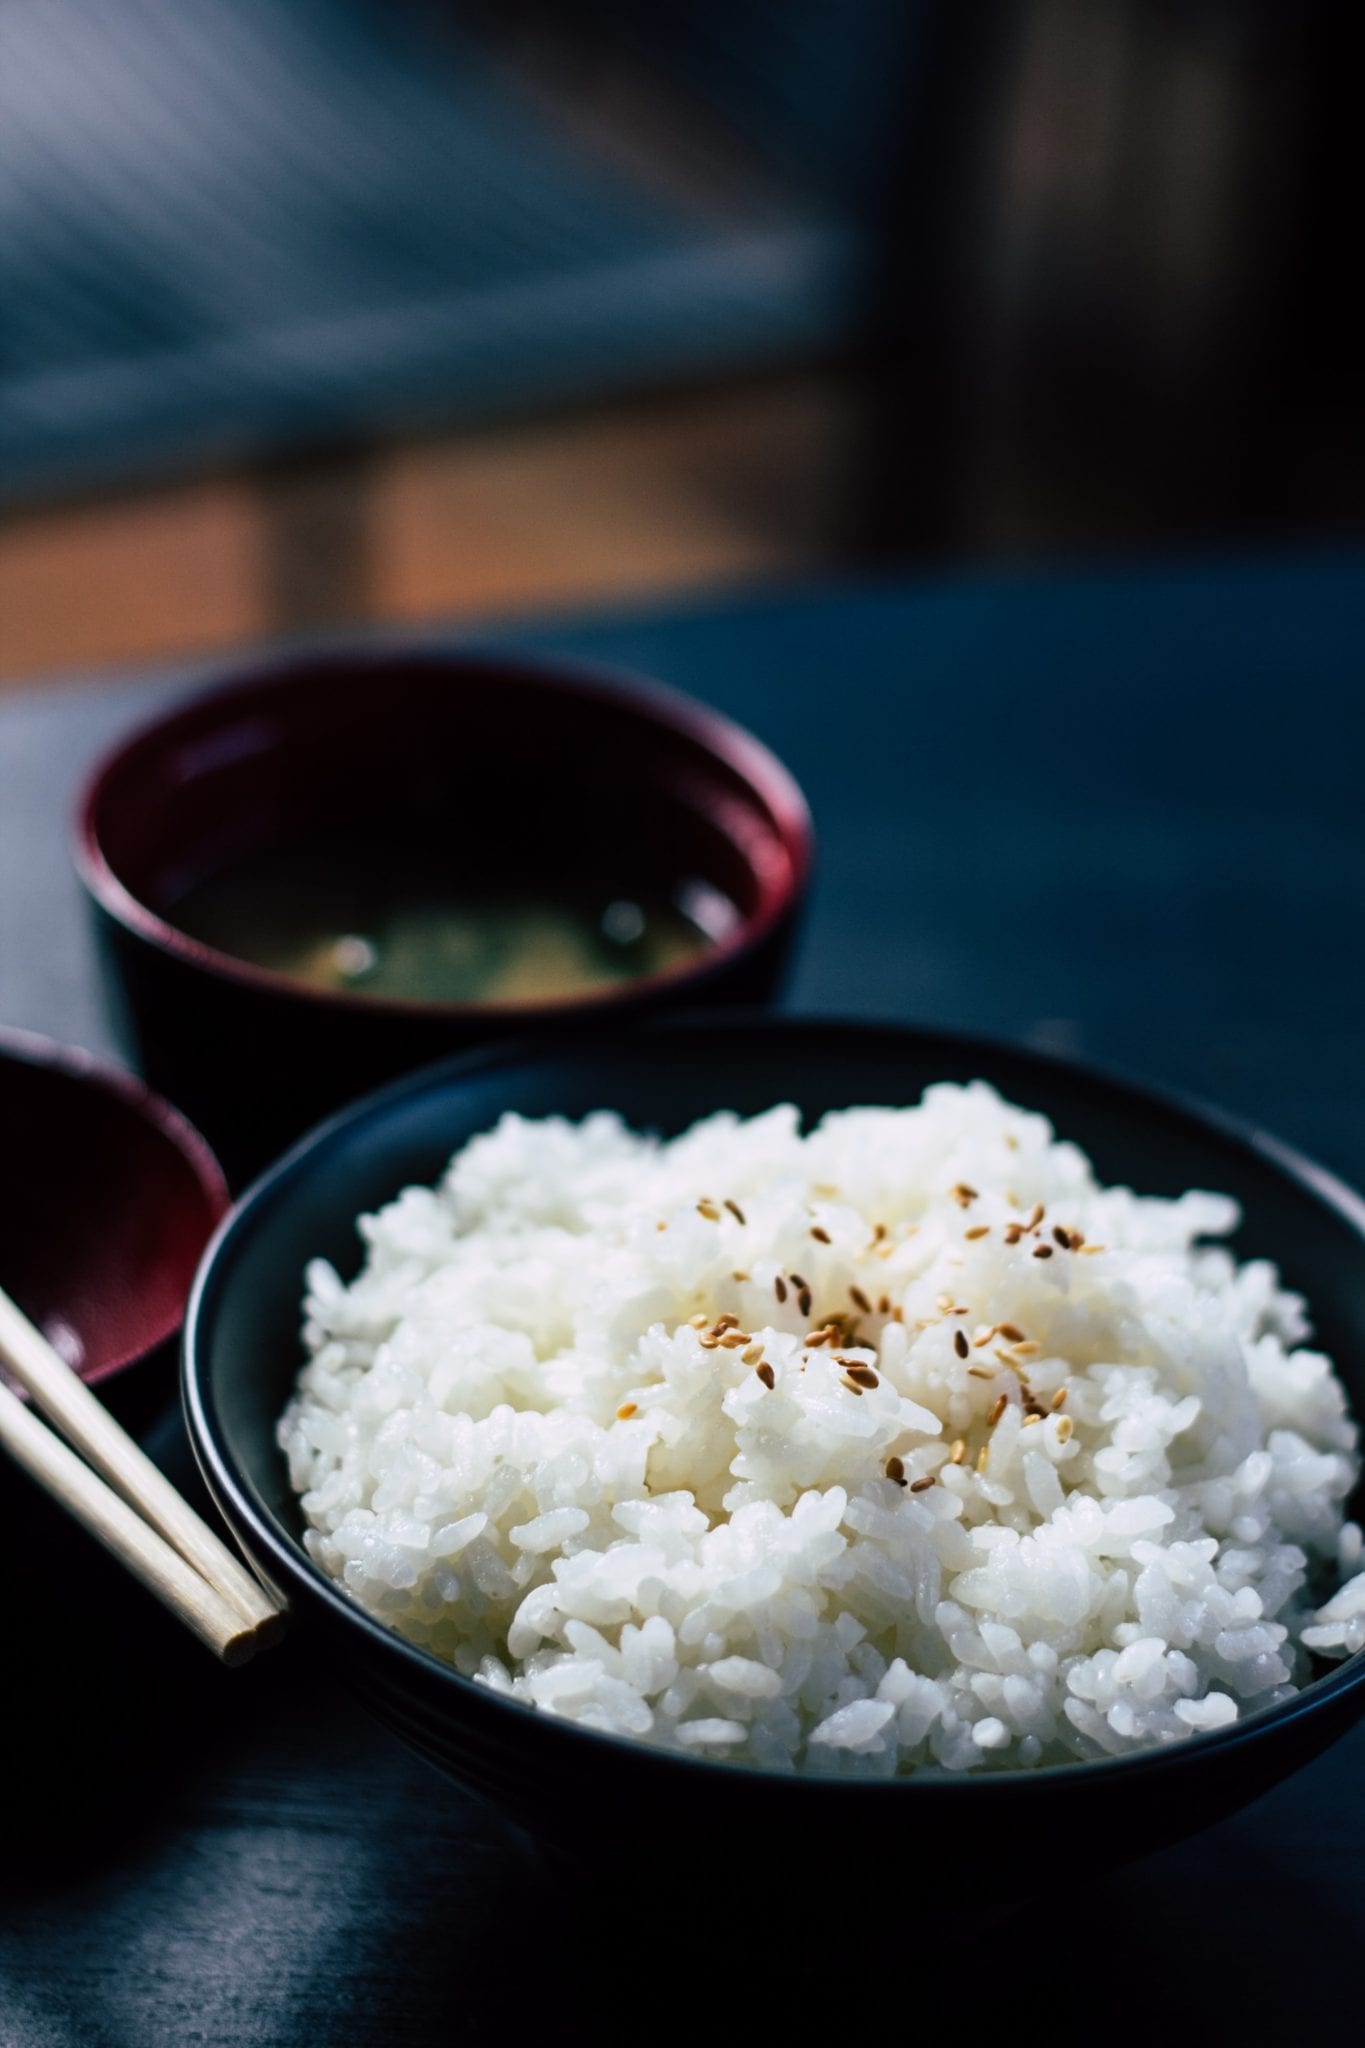 White rice in a dark colored bowl